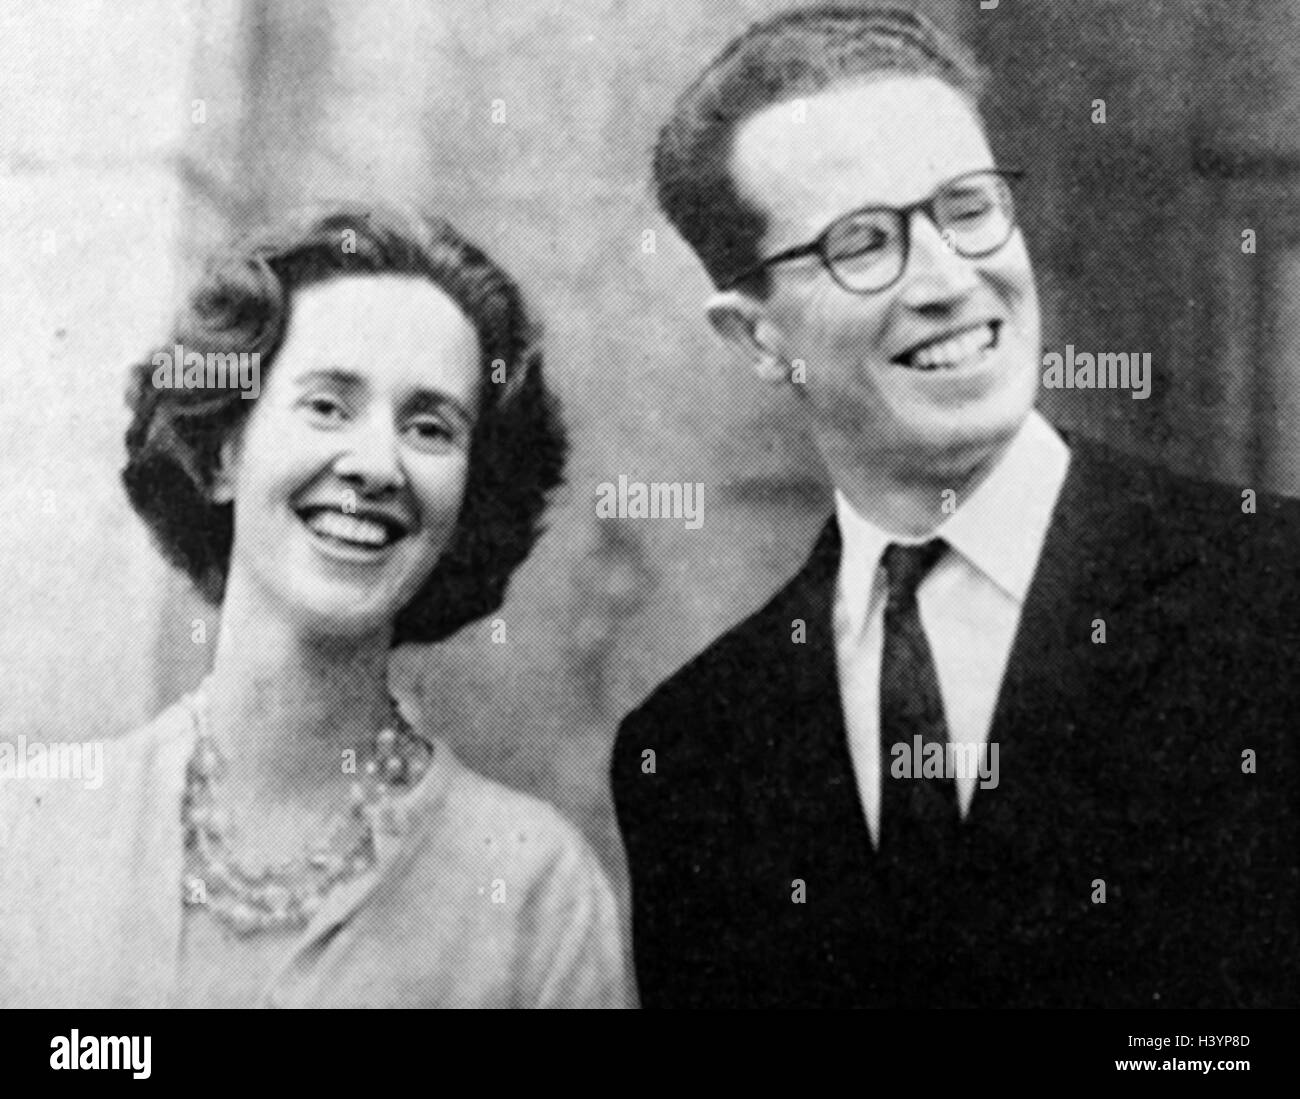 Photograph of Baudouin of Belgium (1930-1993) King of the Belgians, and his fiancée, Fabiola Mora y Aragón (1928-2014) Queen of the Belgians. Dated 20th Century Stock Photo